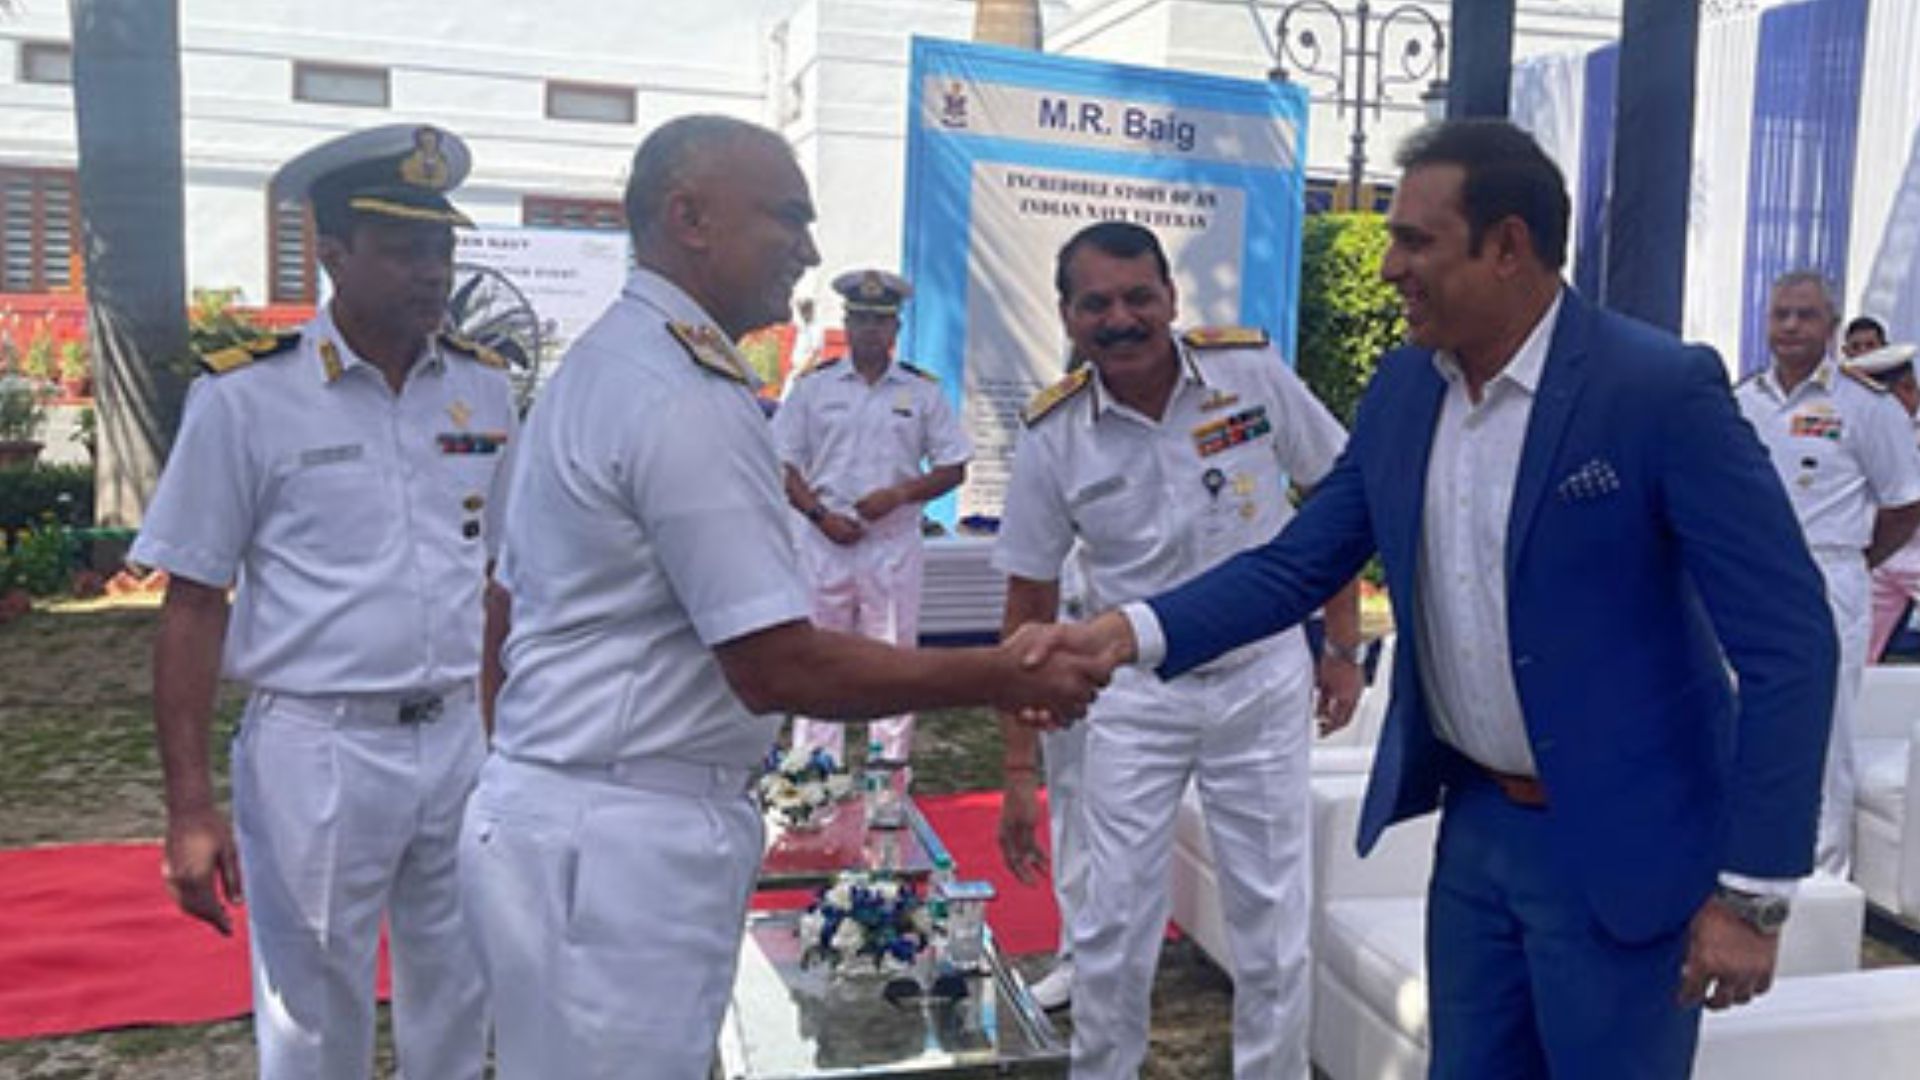 VVS Laxman Meets Indian Navy Chief R Hari Kumar